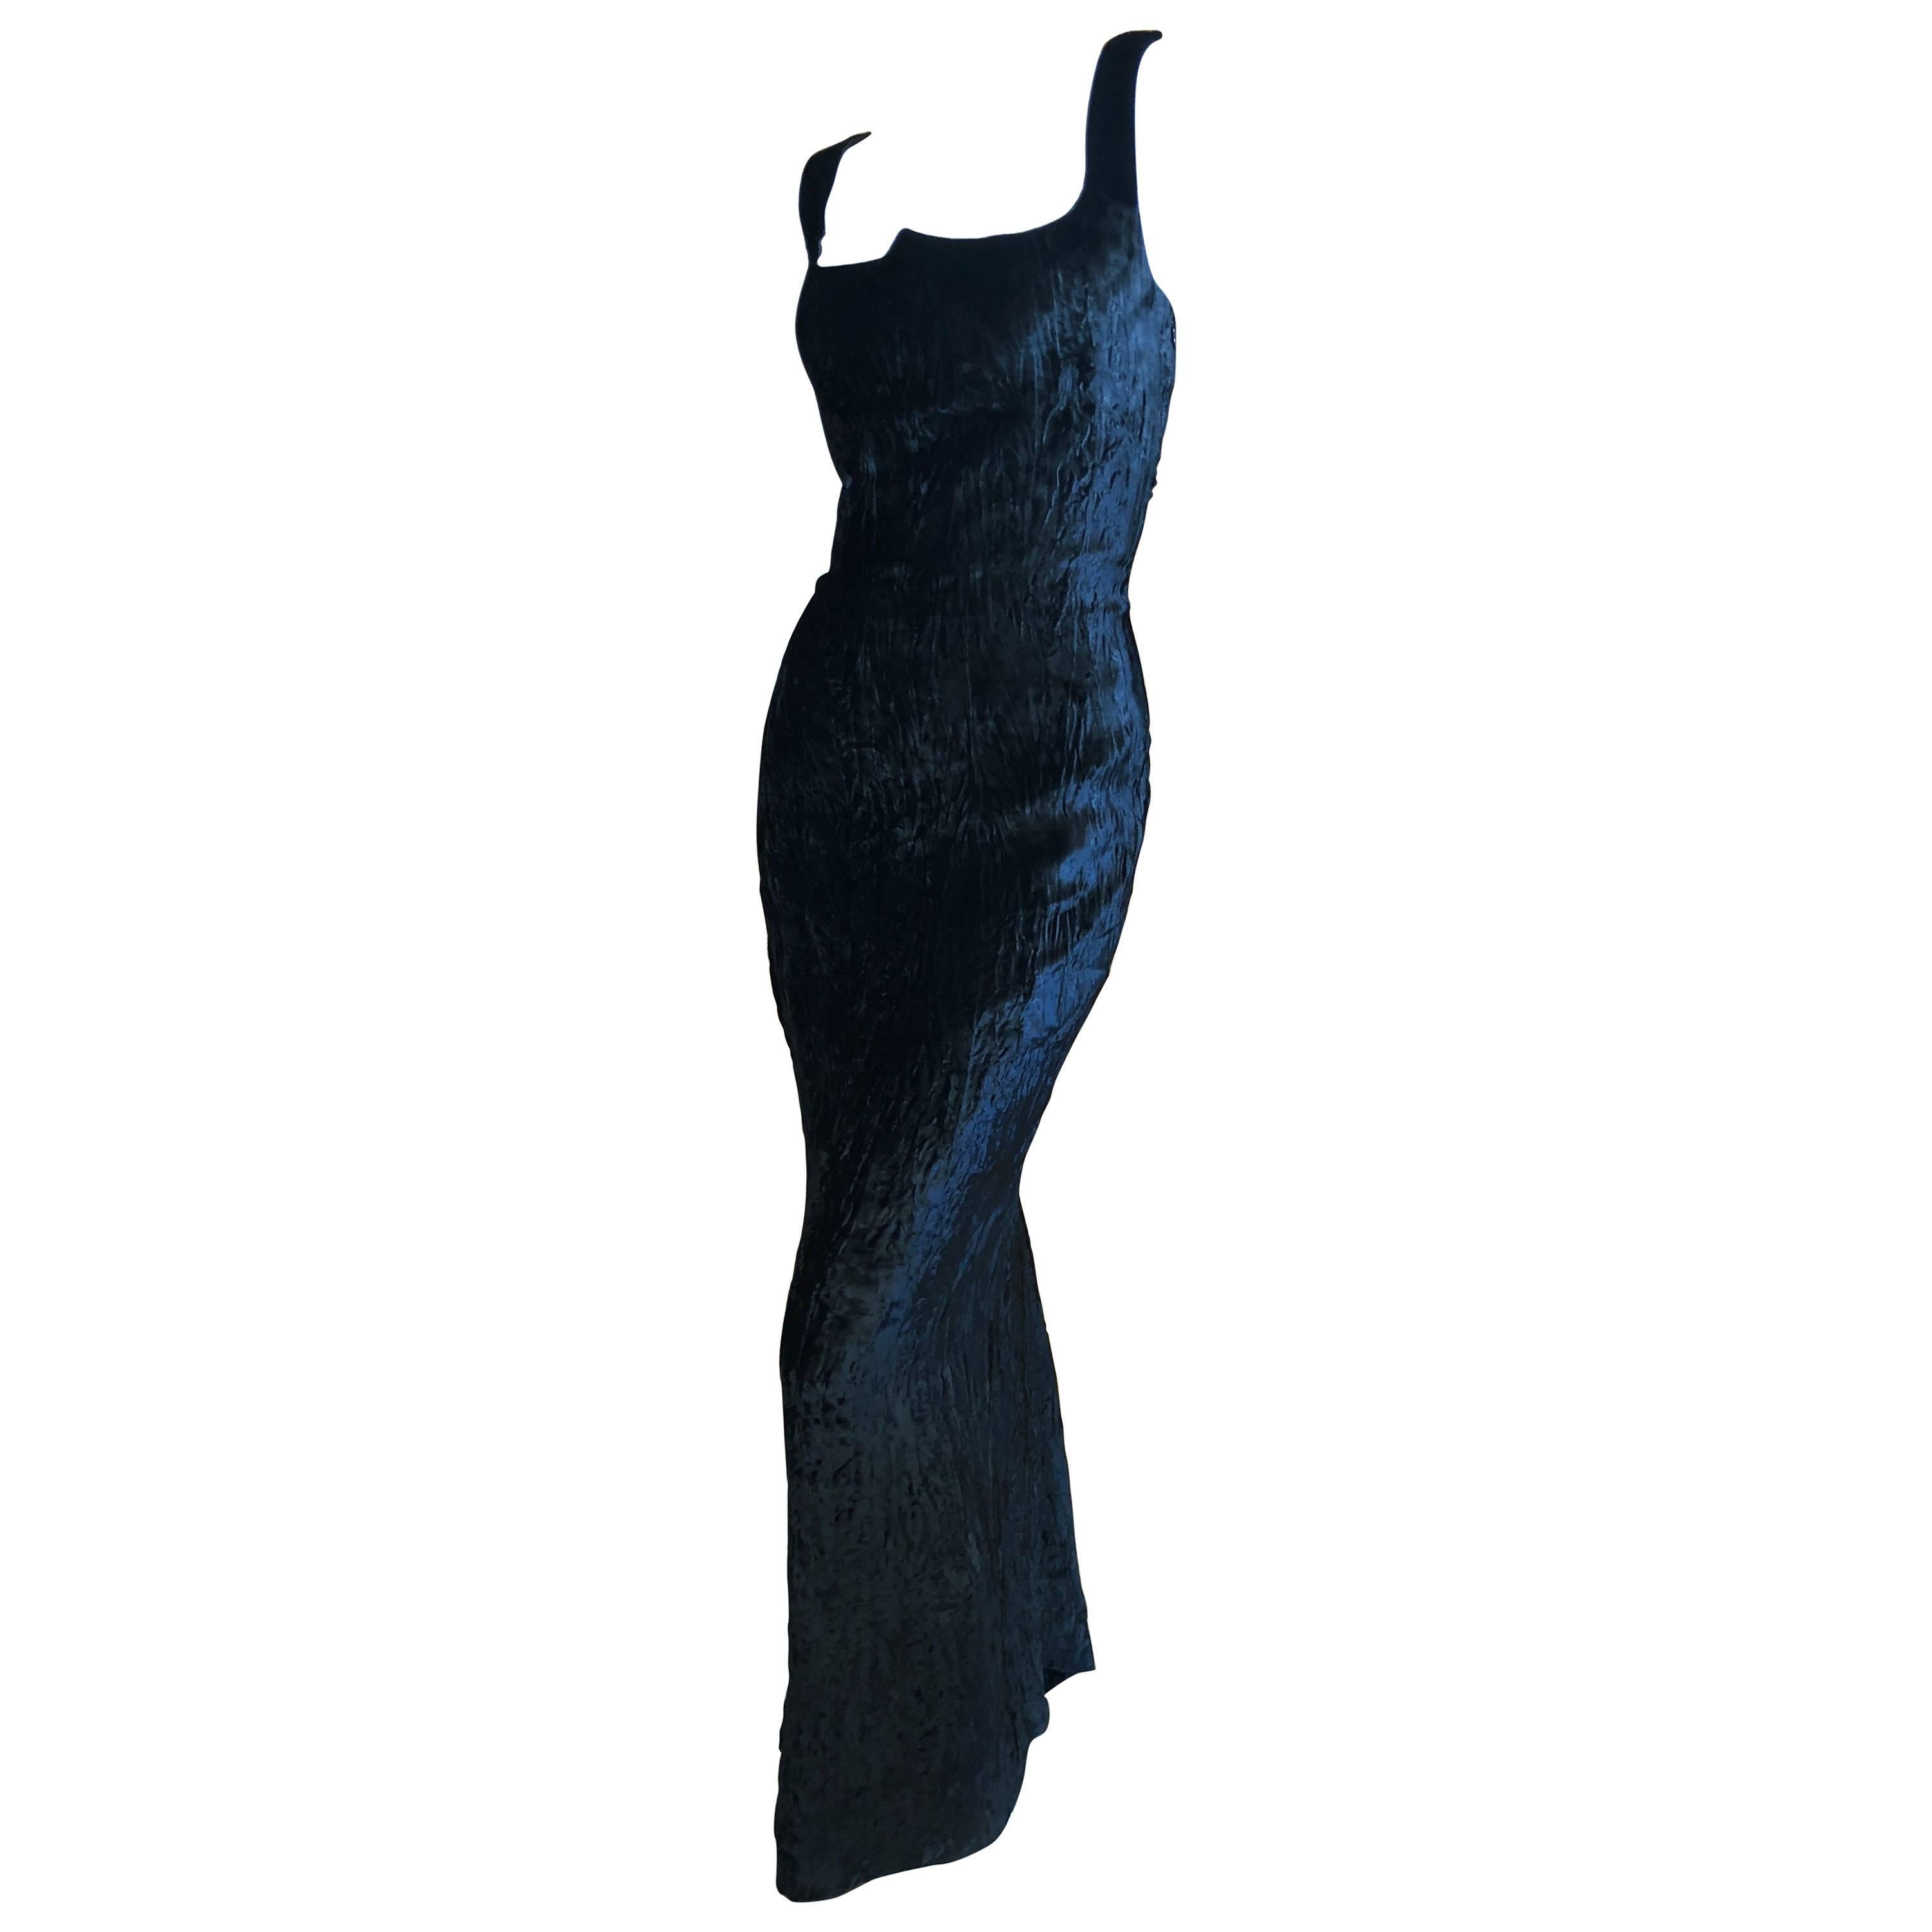 Gianni Versace Couture Vintage 1989 Textured Black Velvet  Evening Dress For Sale